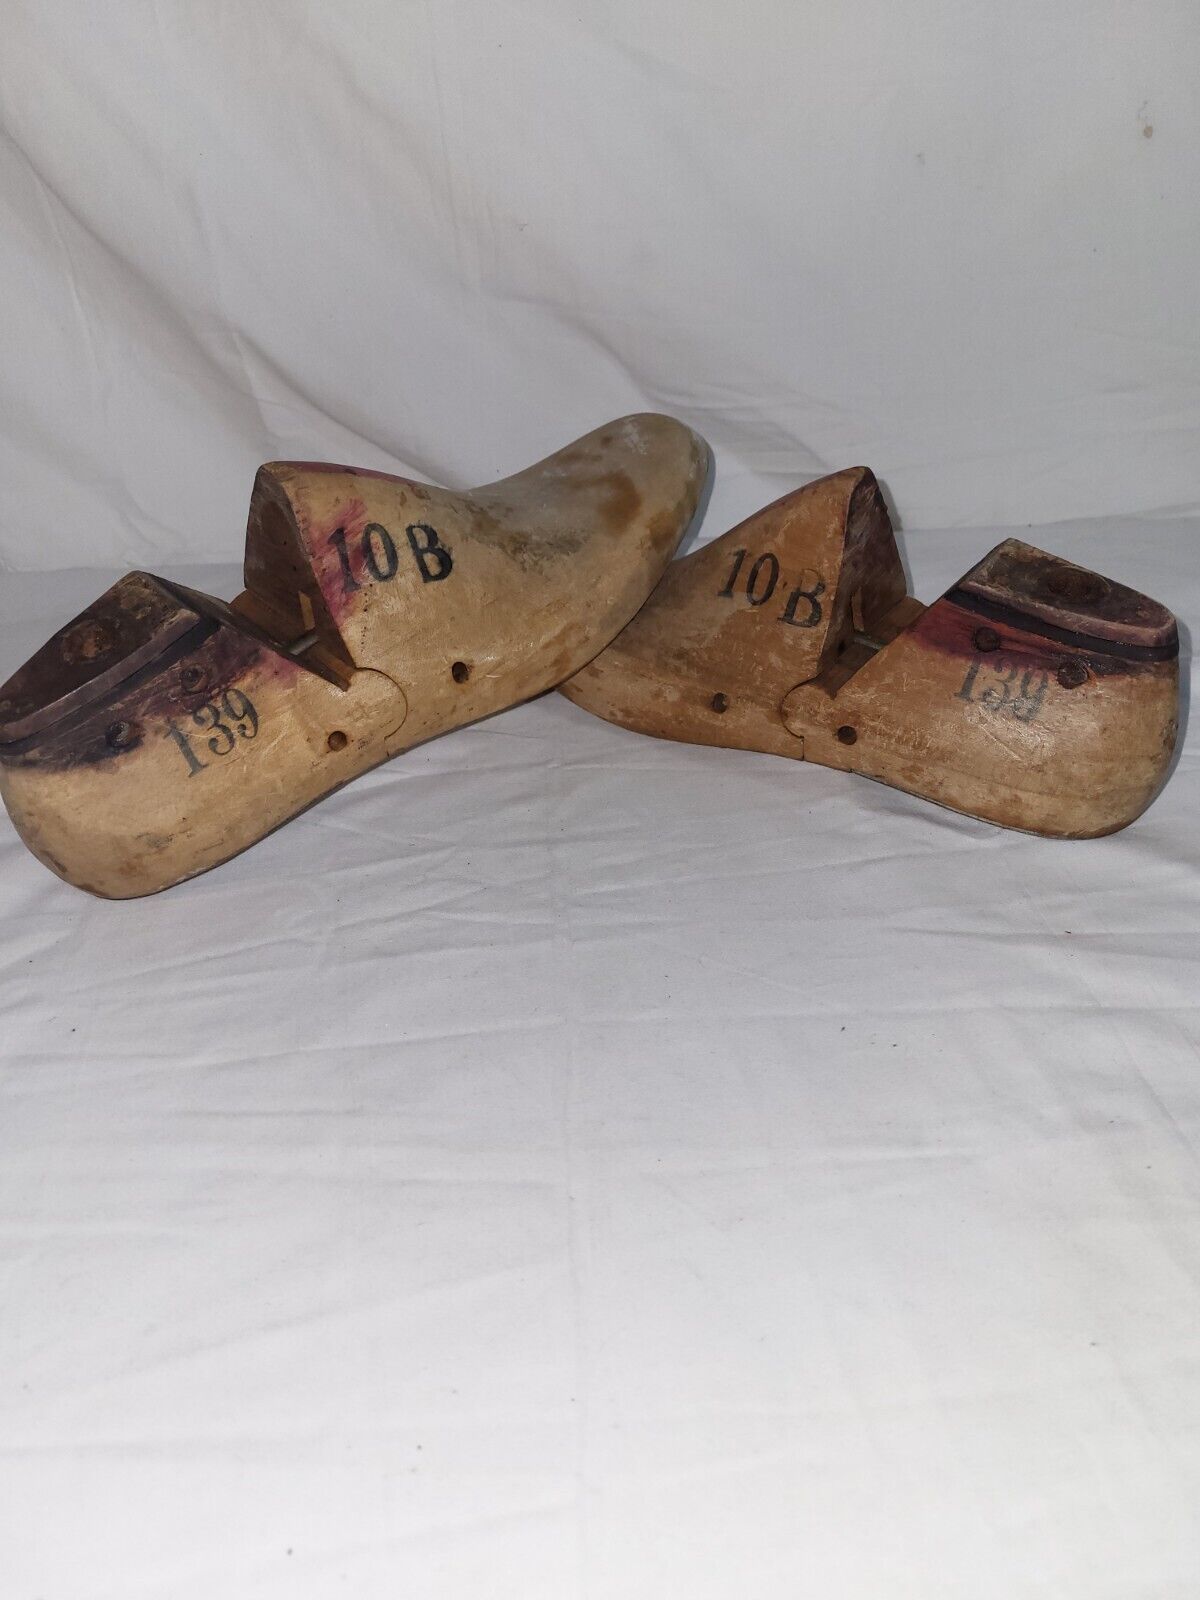 Vintage Krentler Bros. Wooden Shoe Molds, 10B 139, Milwaukee Wisconsin U.S.A.